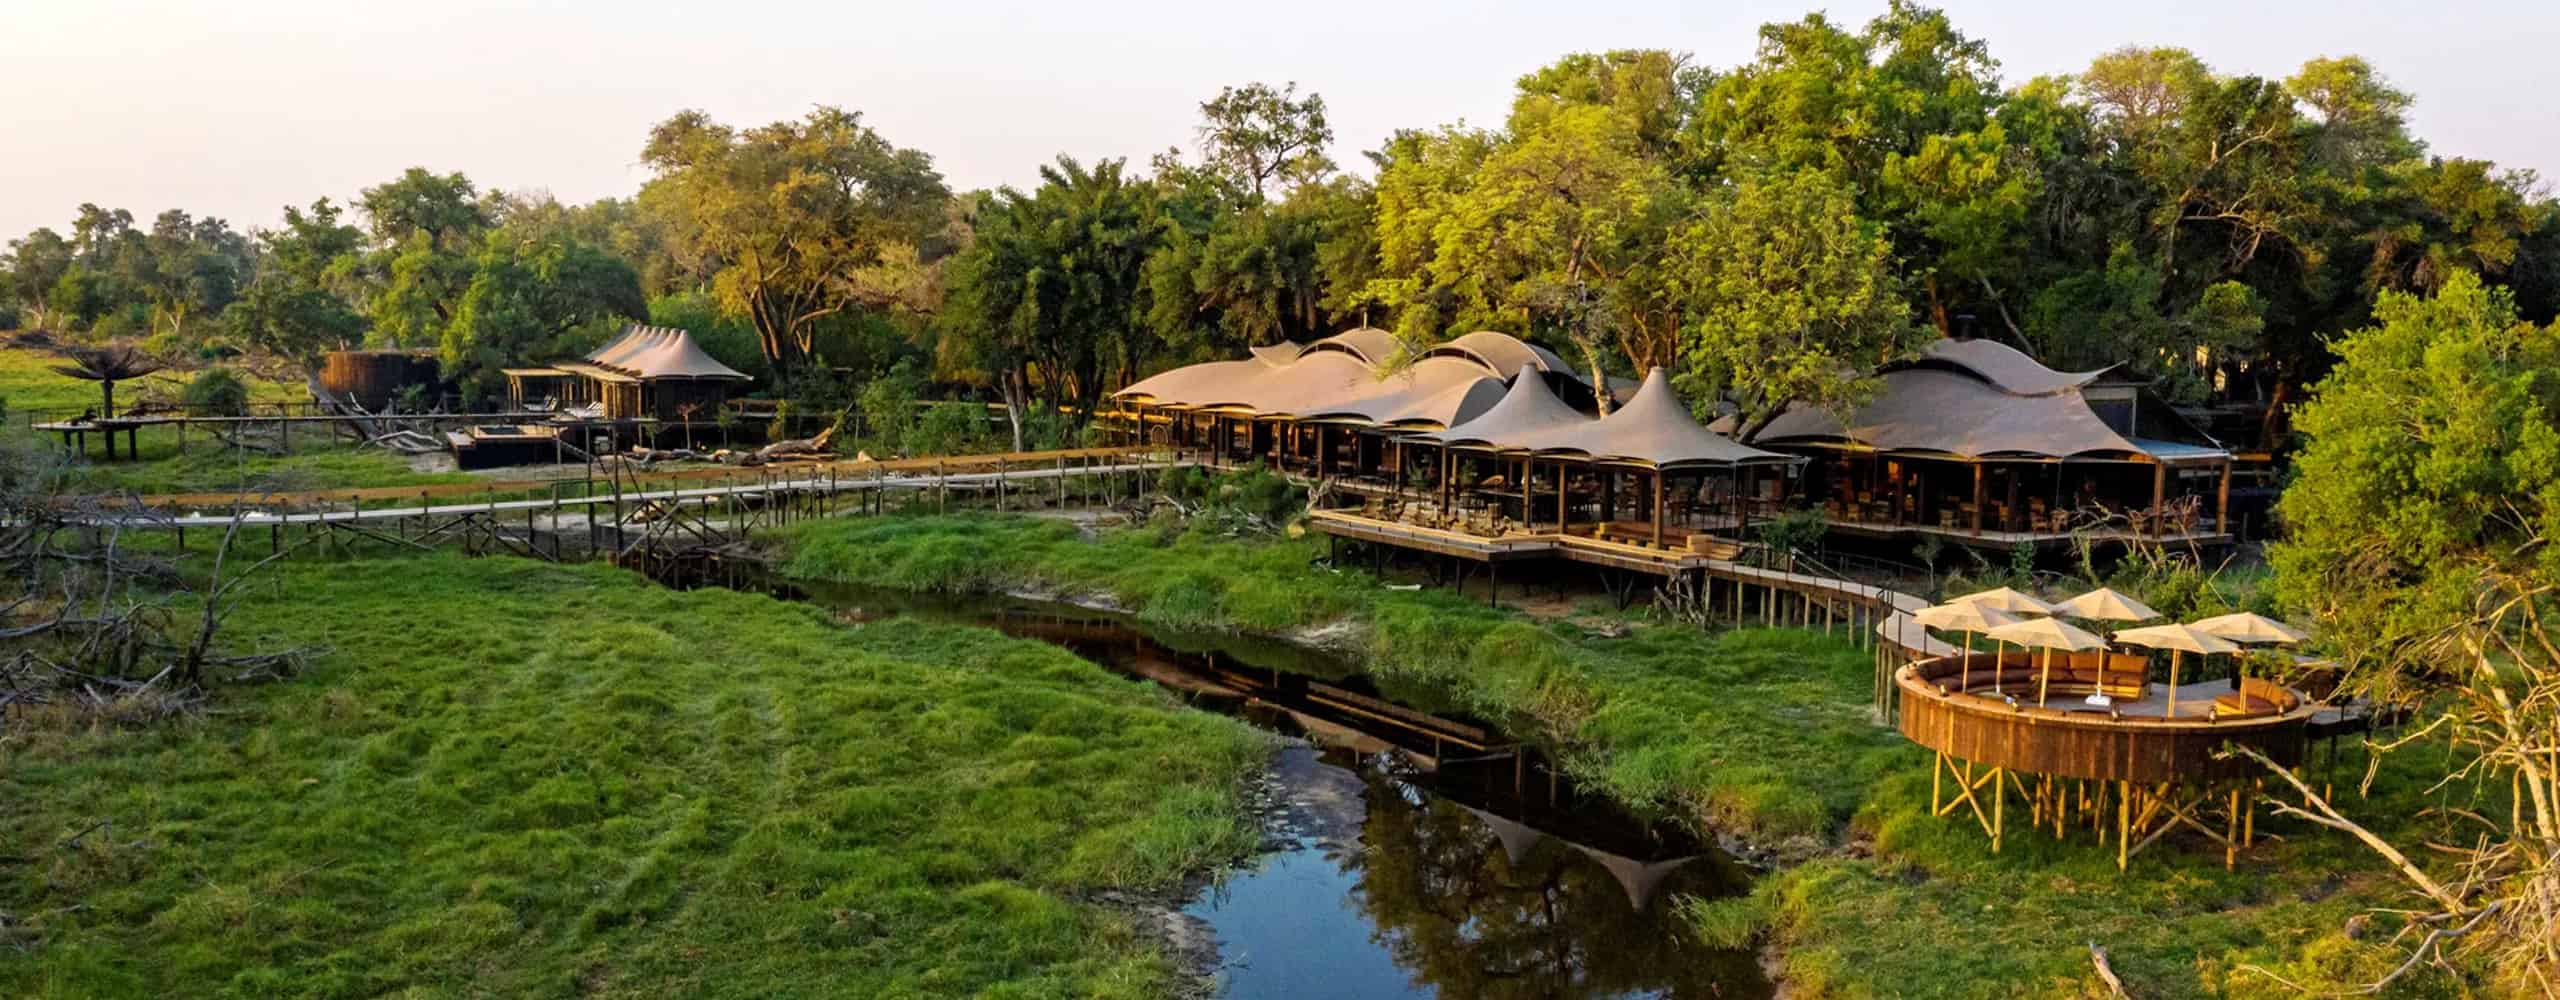 Xigera Safari Lodge - Botswana, Africa